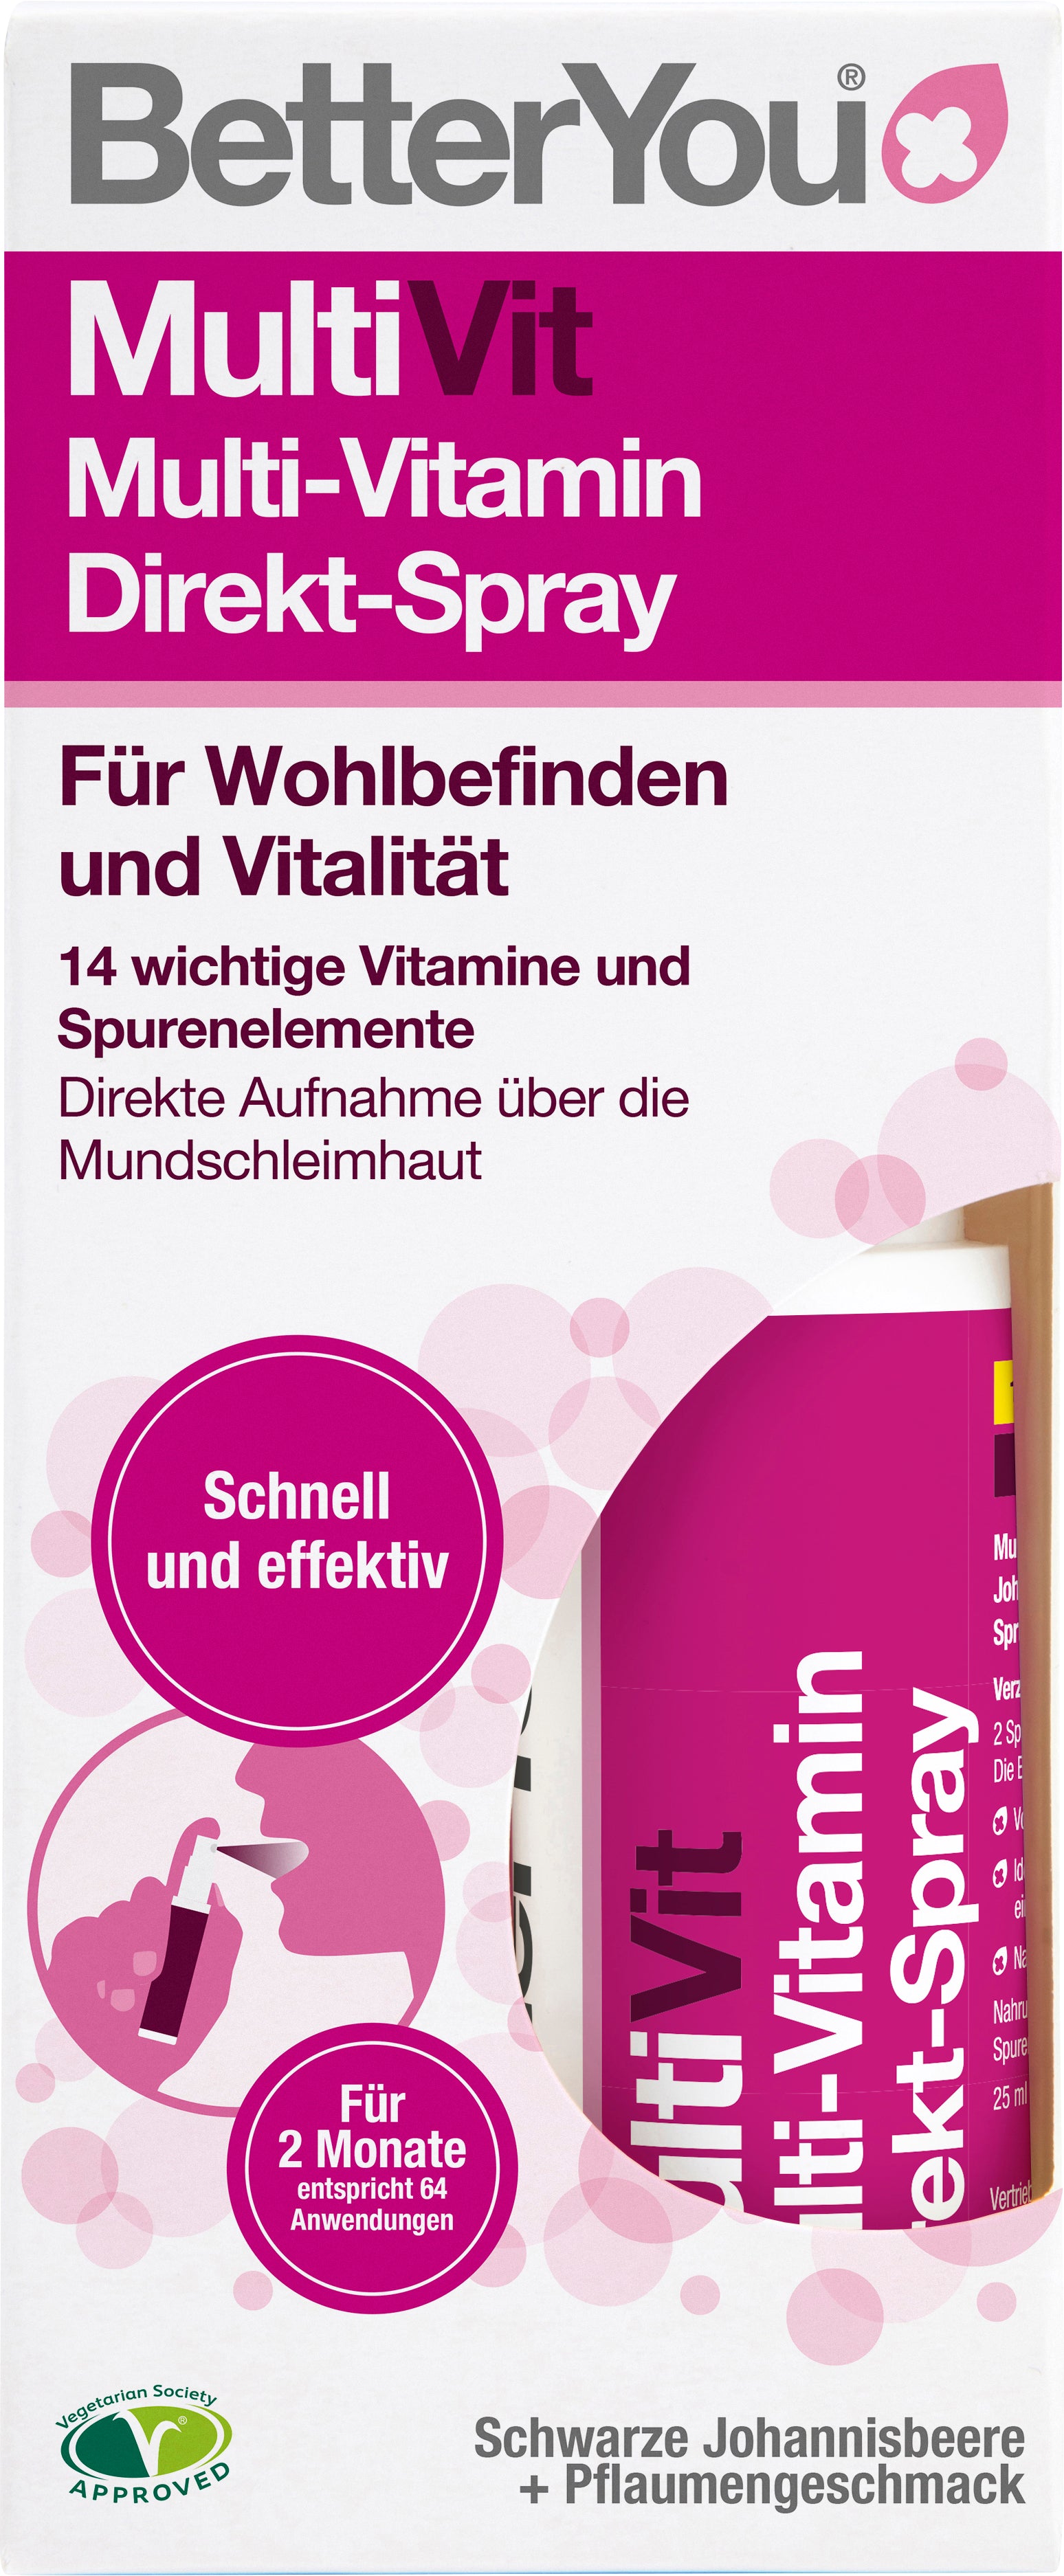 BetterYou Multi-Vitamin Direkt-Spray, 25 ml